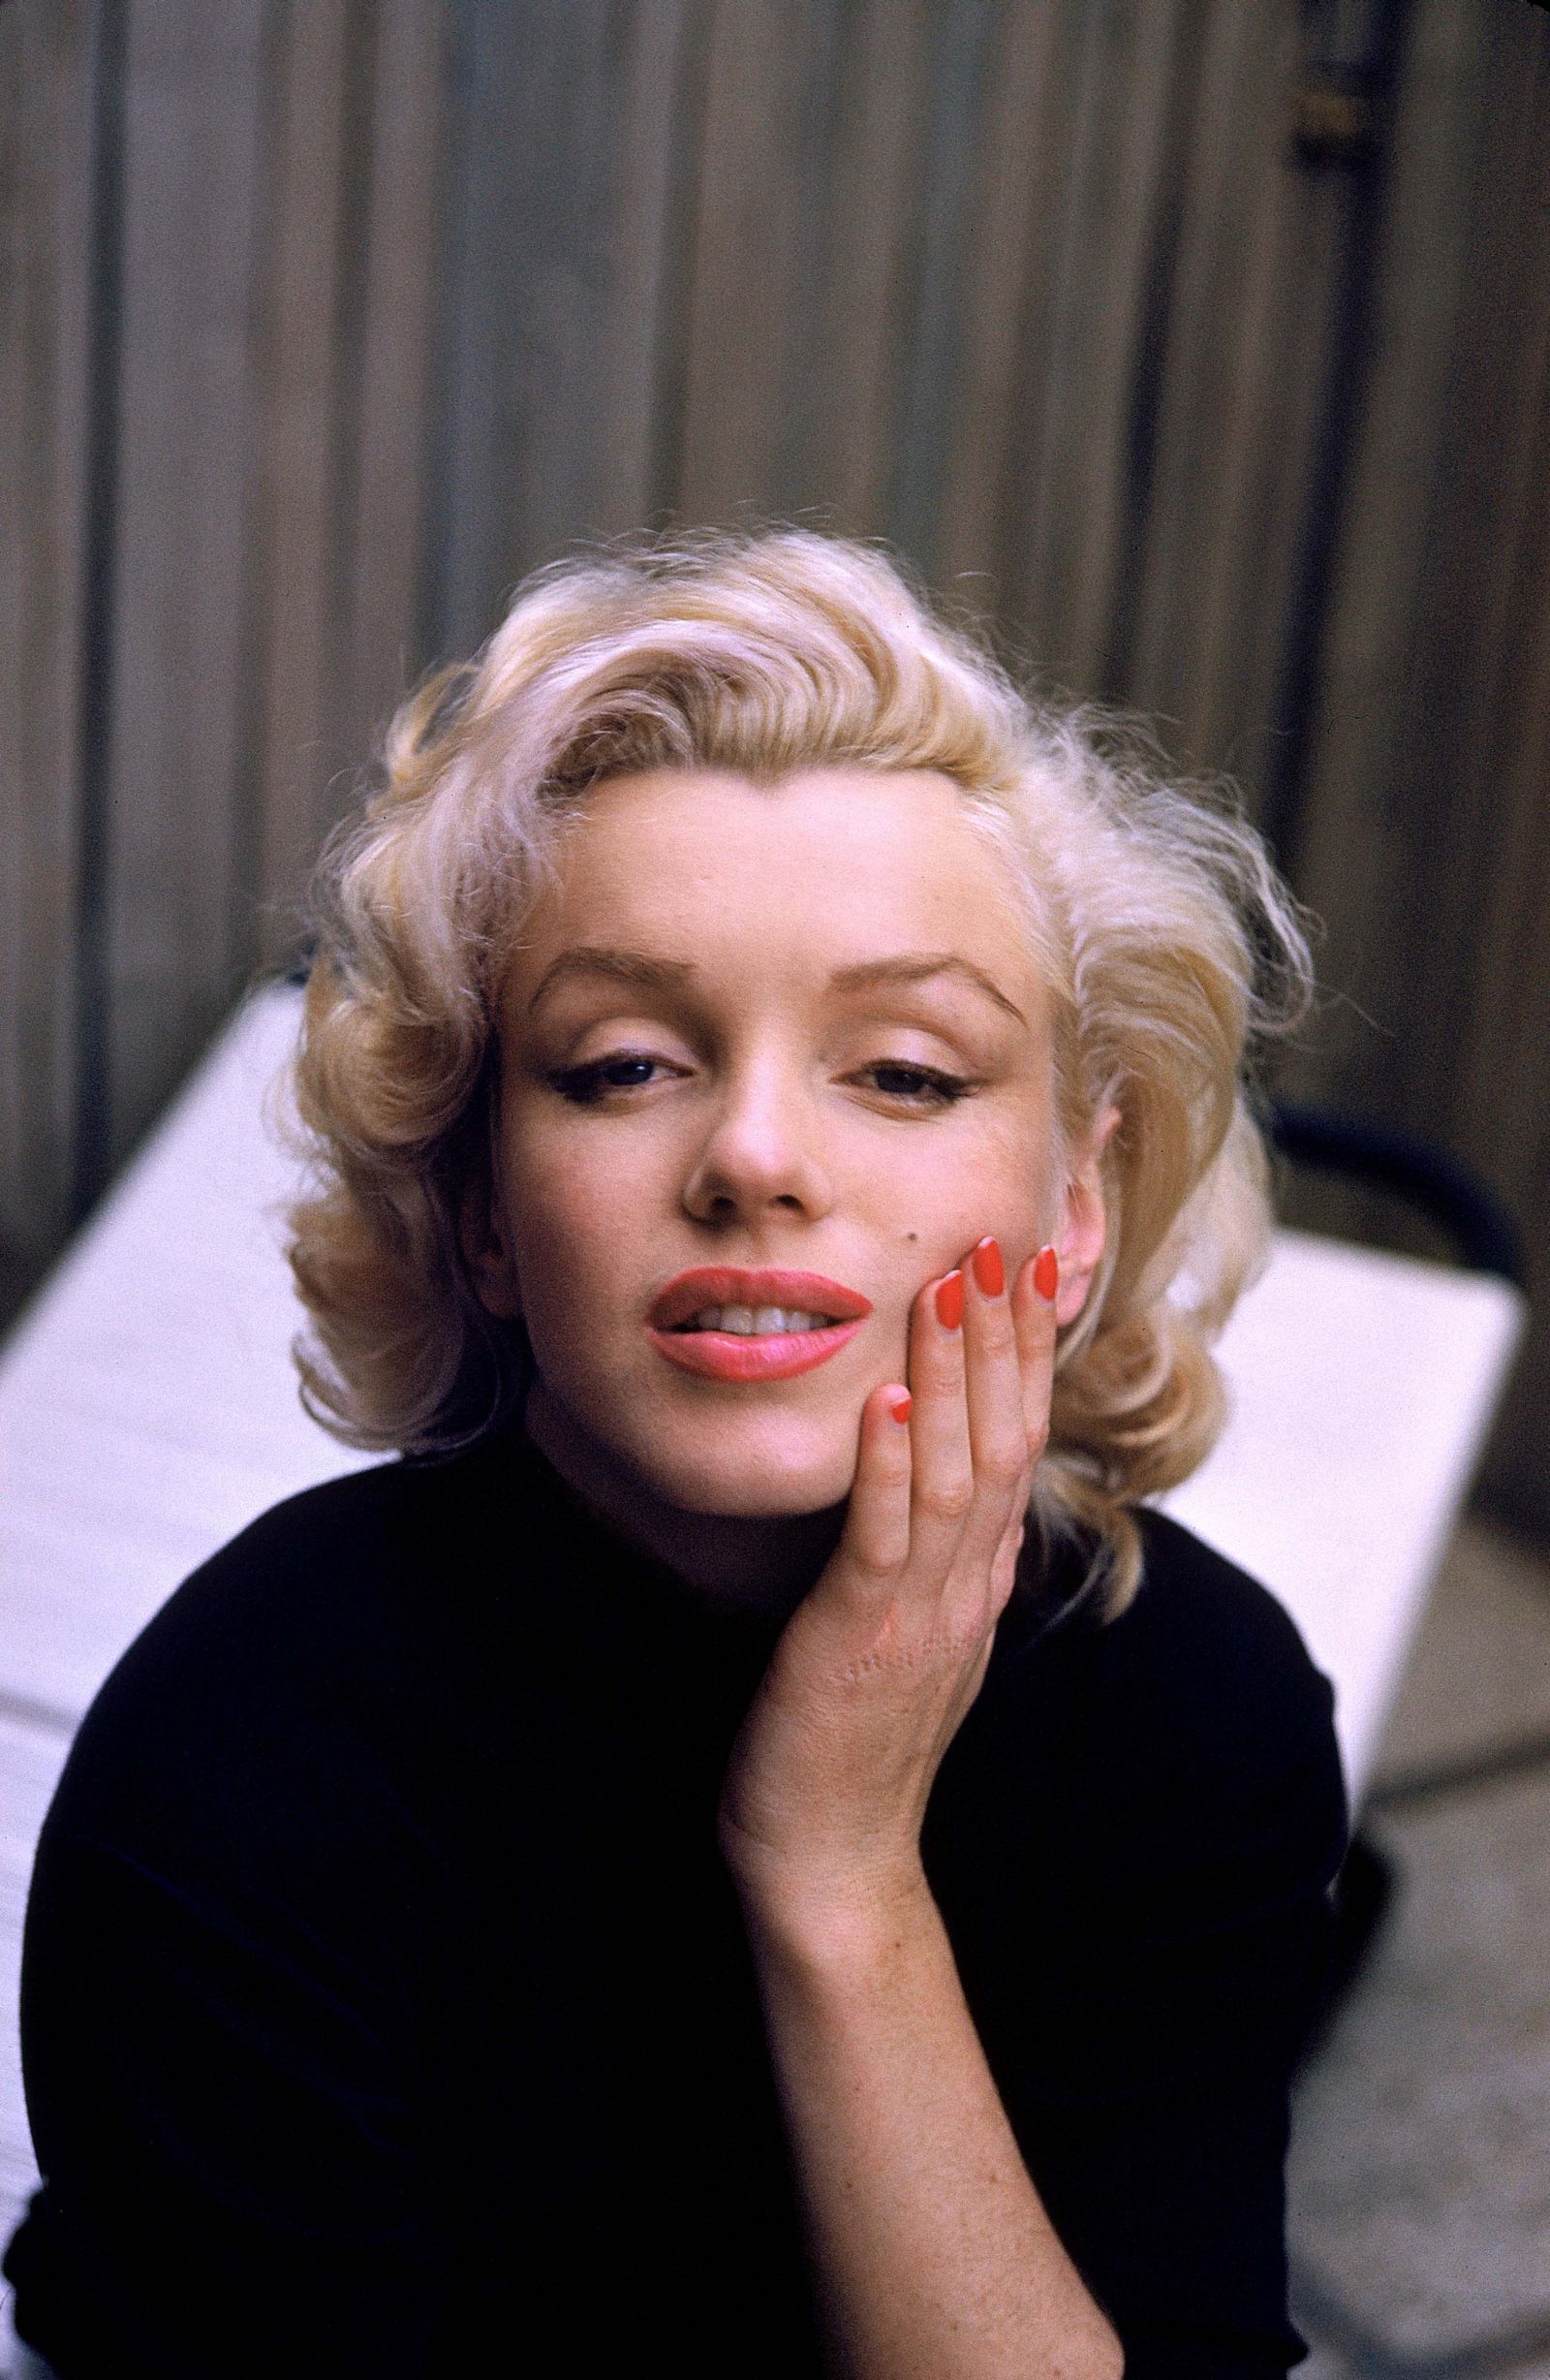 Marilyn Monroe photo 585 of 2214 pics, wallpaper - photo #195740 ...